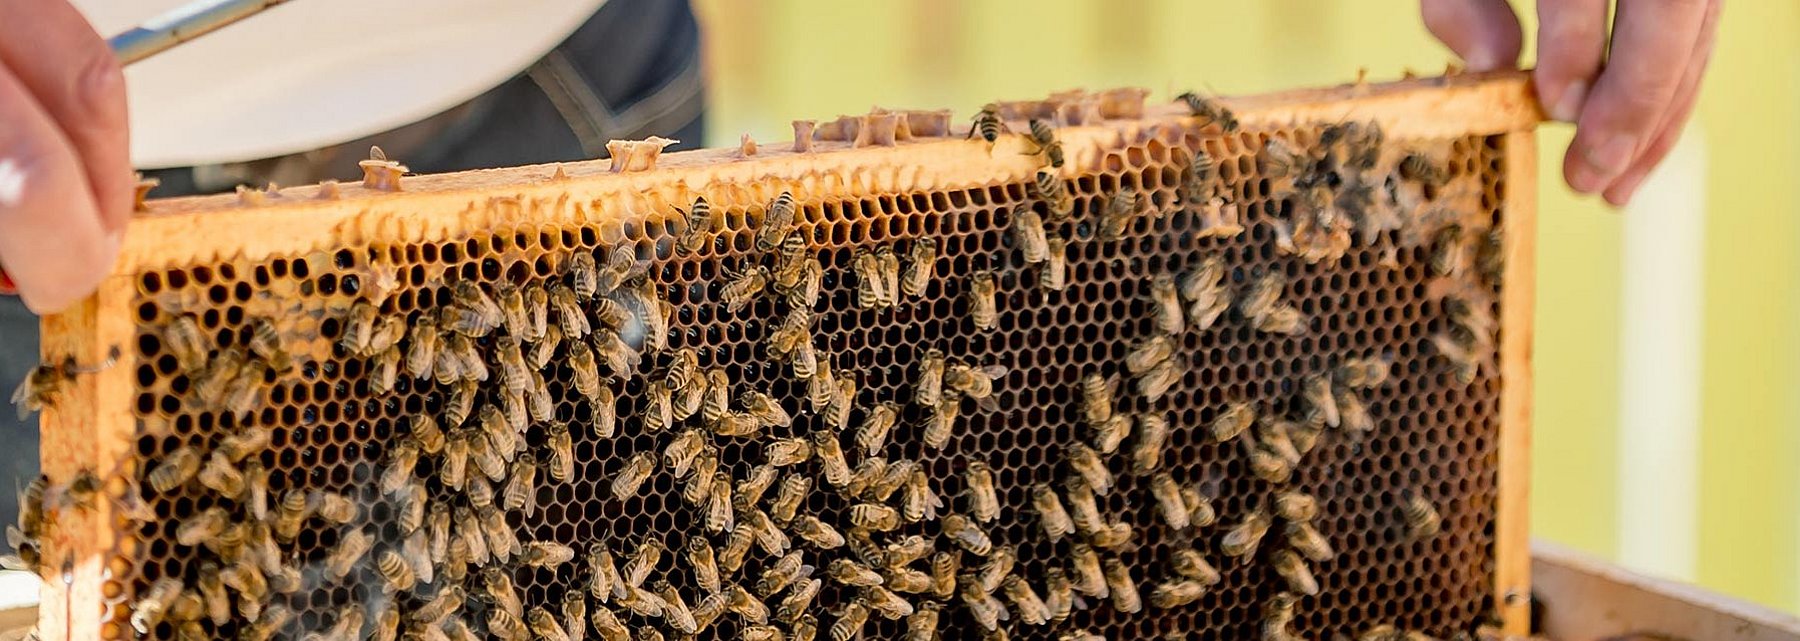 Bienenwabe mit Honigbienen